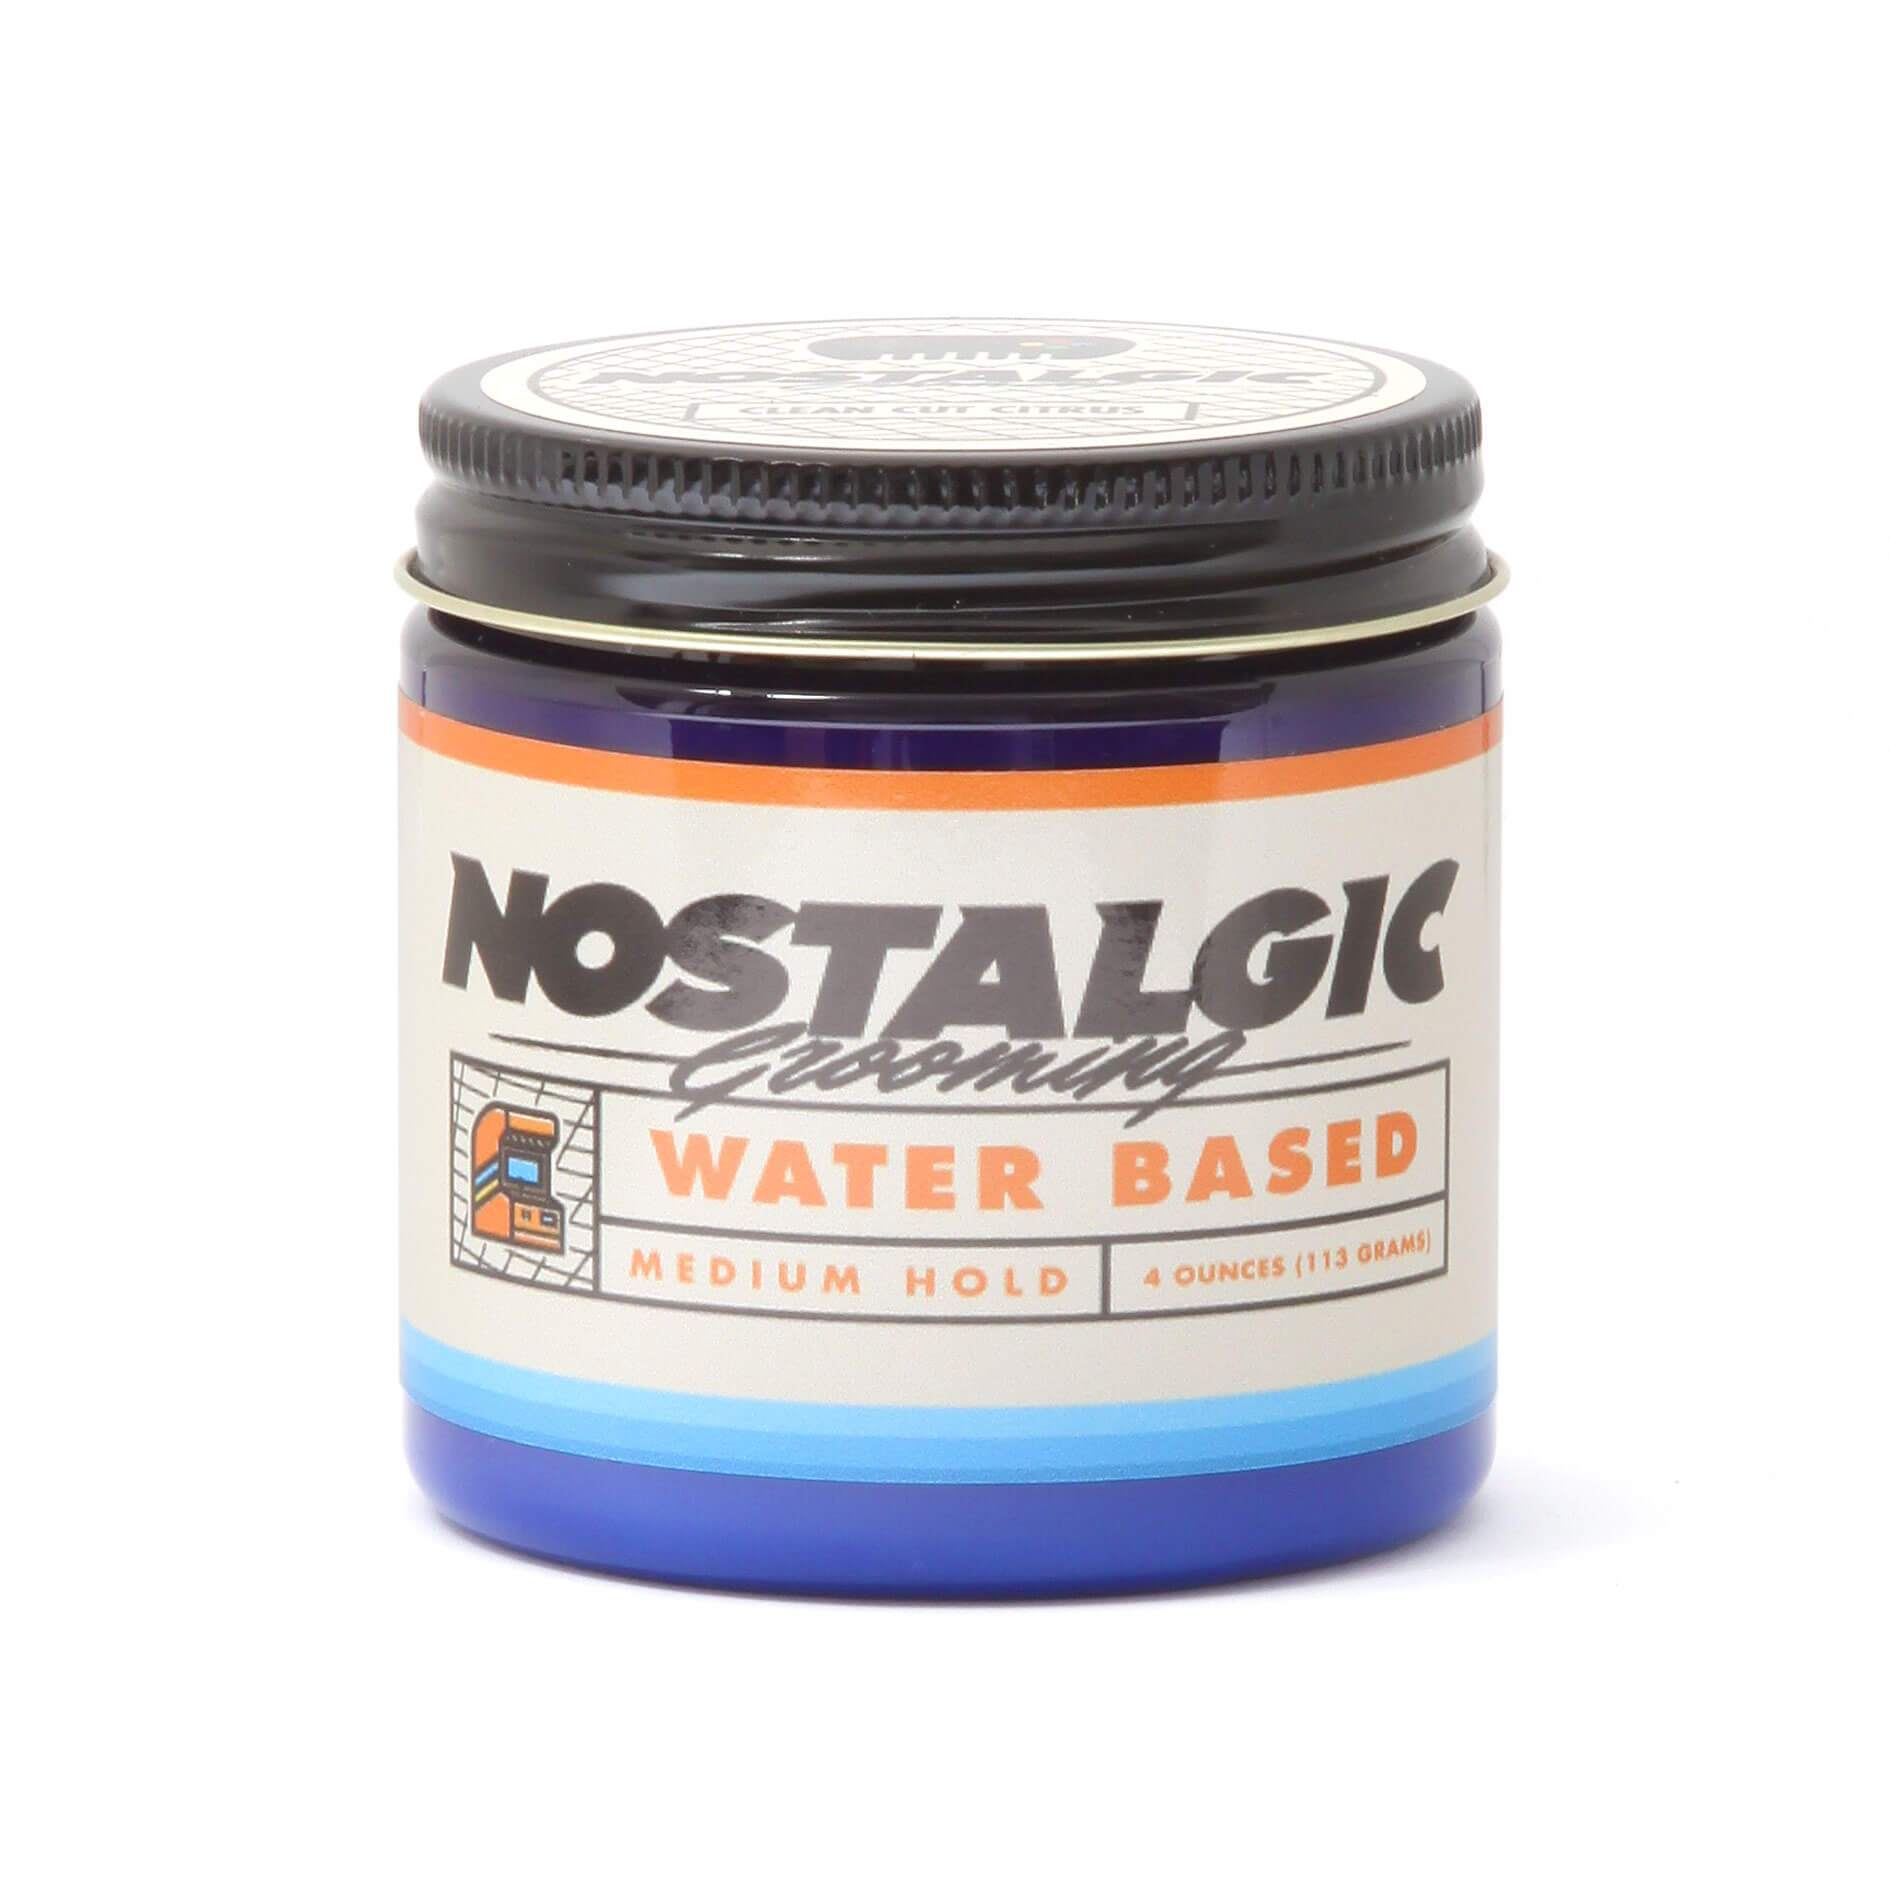 Nostalgic Grooming Medium Water Based Pomade